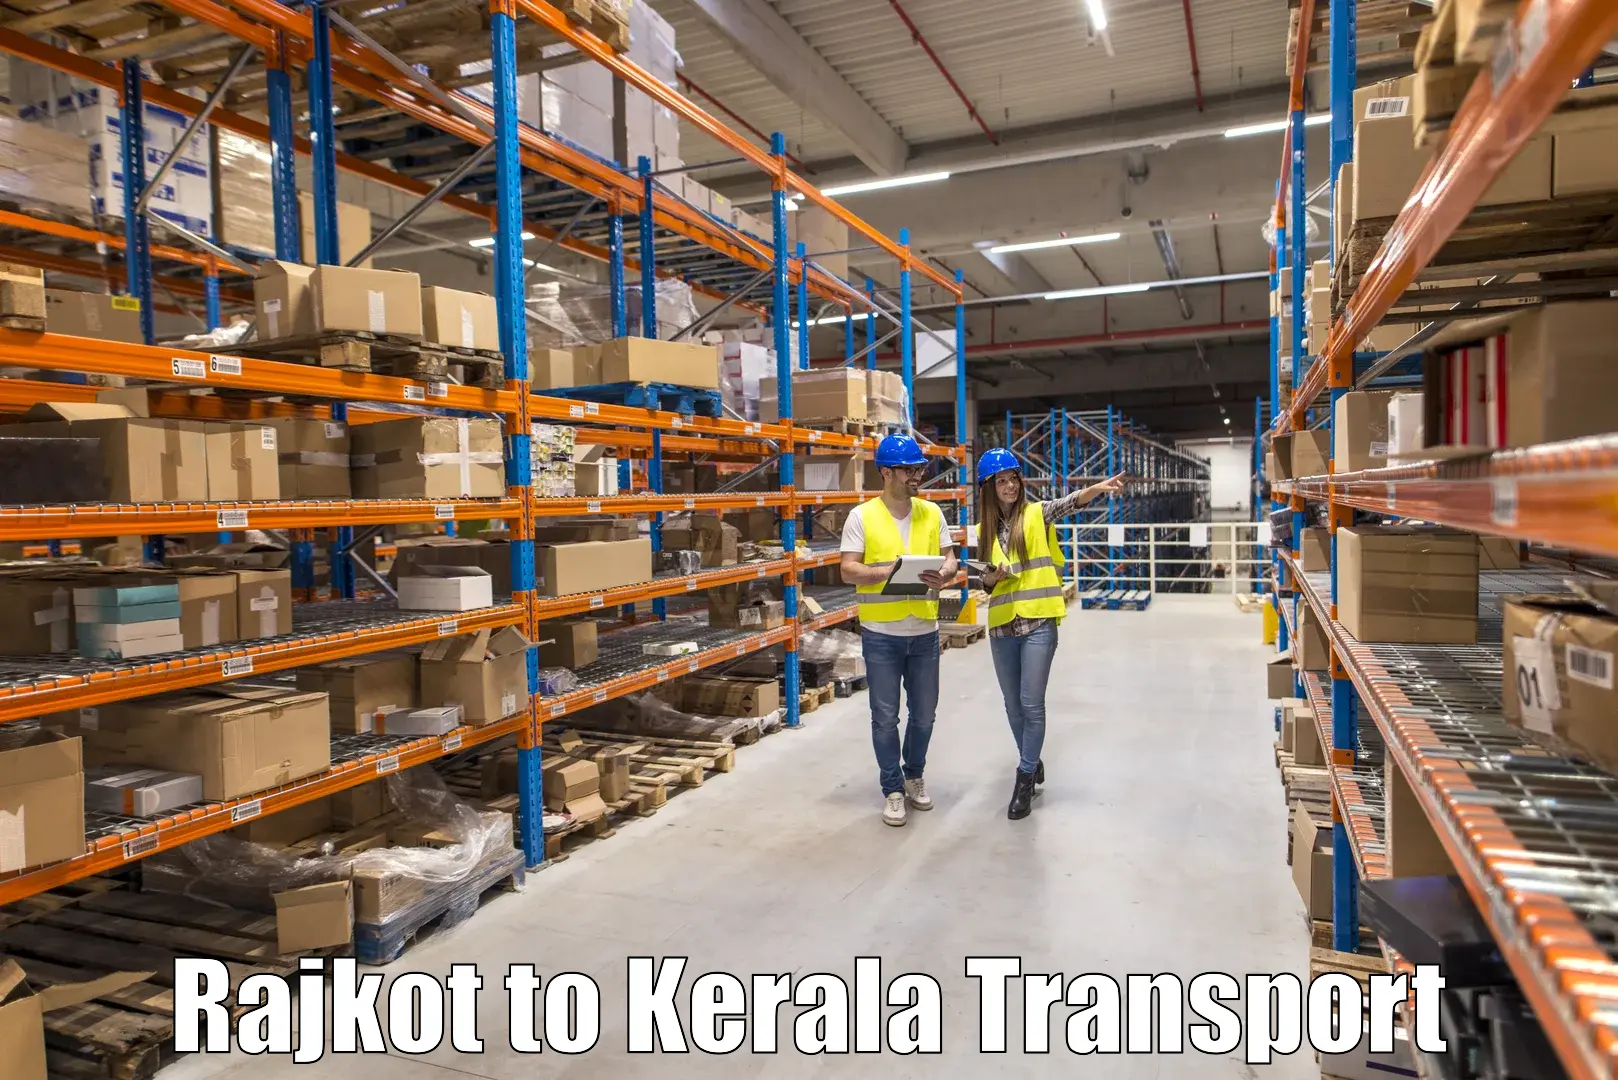 Truck transport companies in India Rajkot to Kuchi